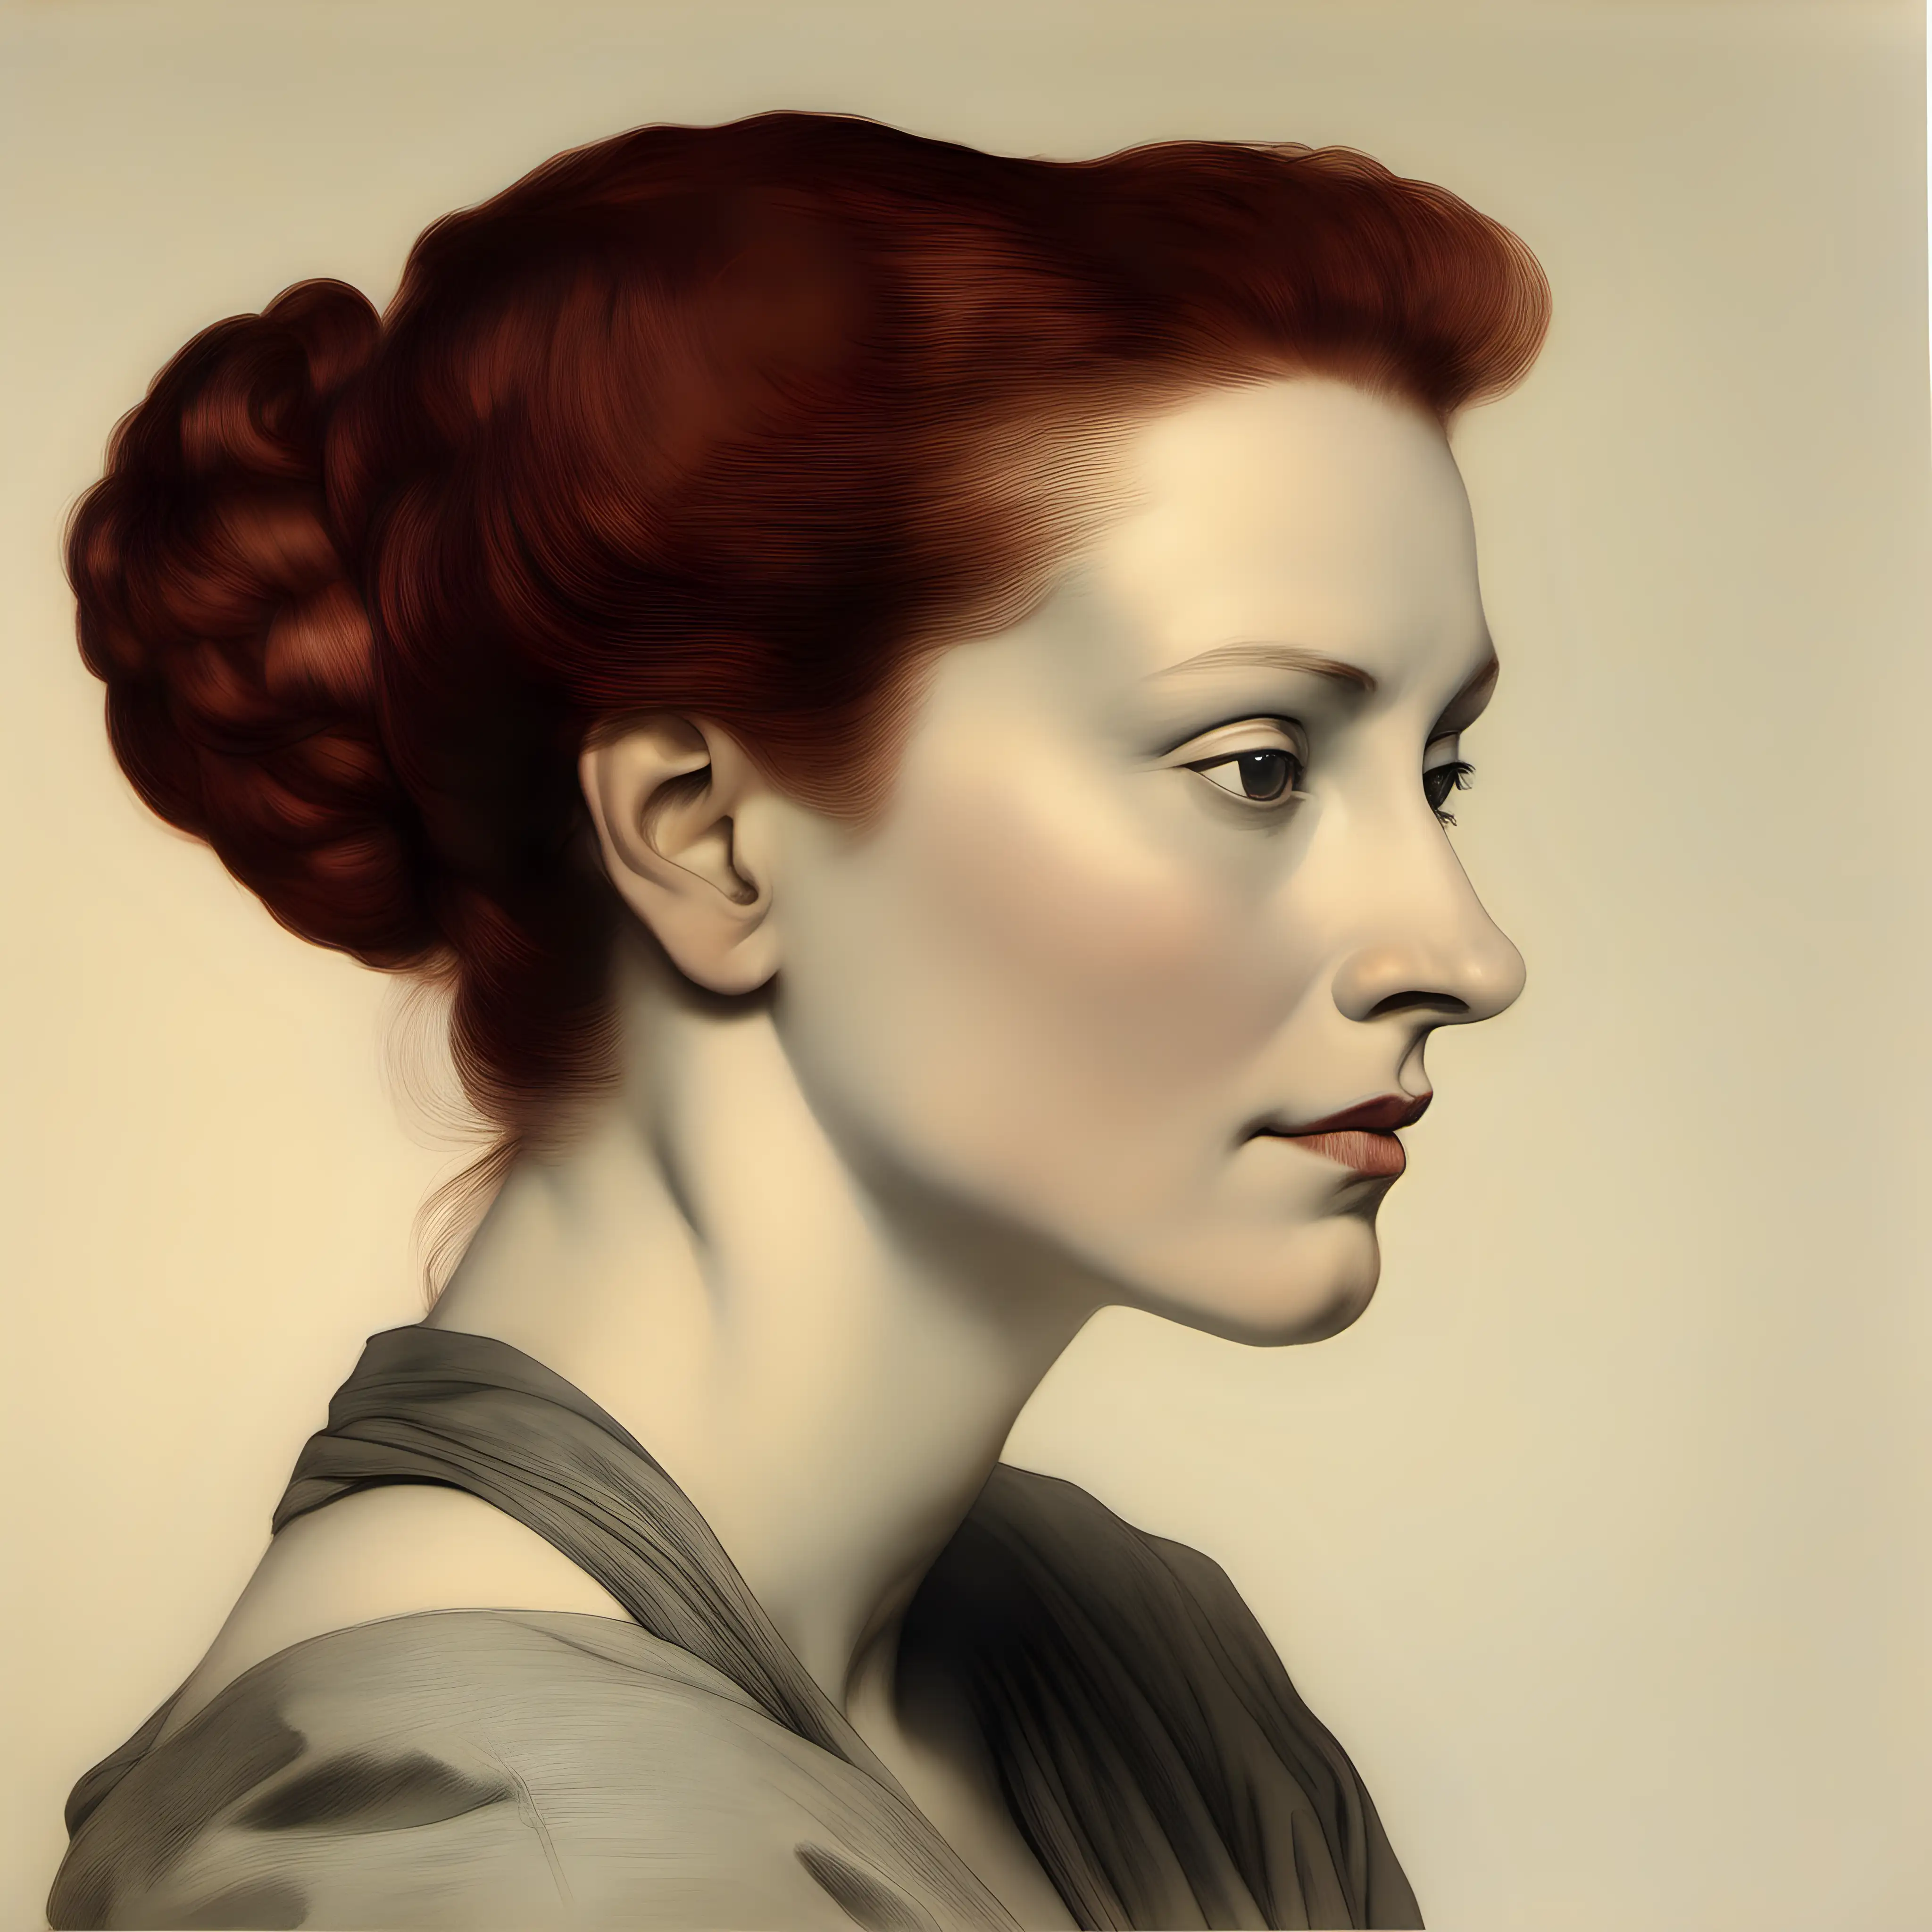 Elegant Dark Red Haired Woman in Contemporary Attire